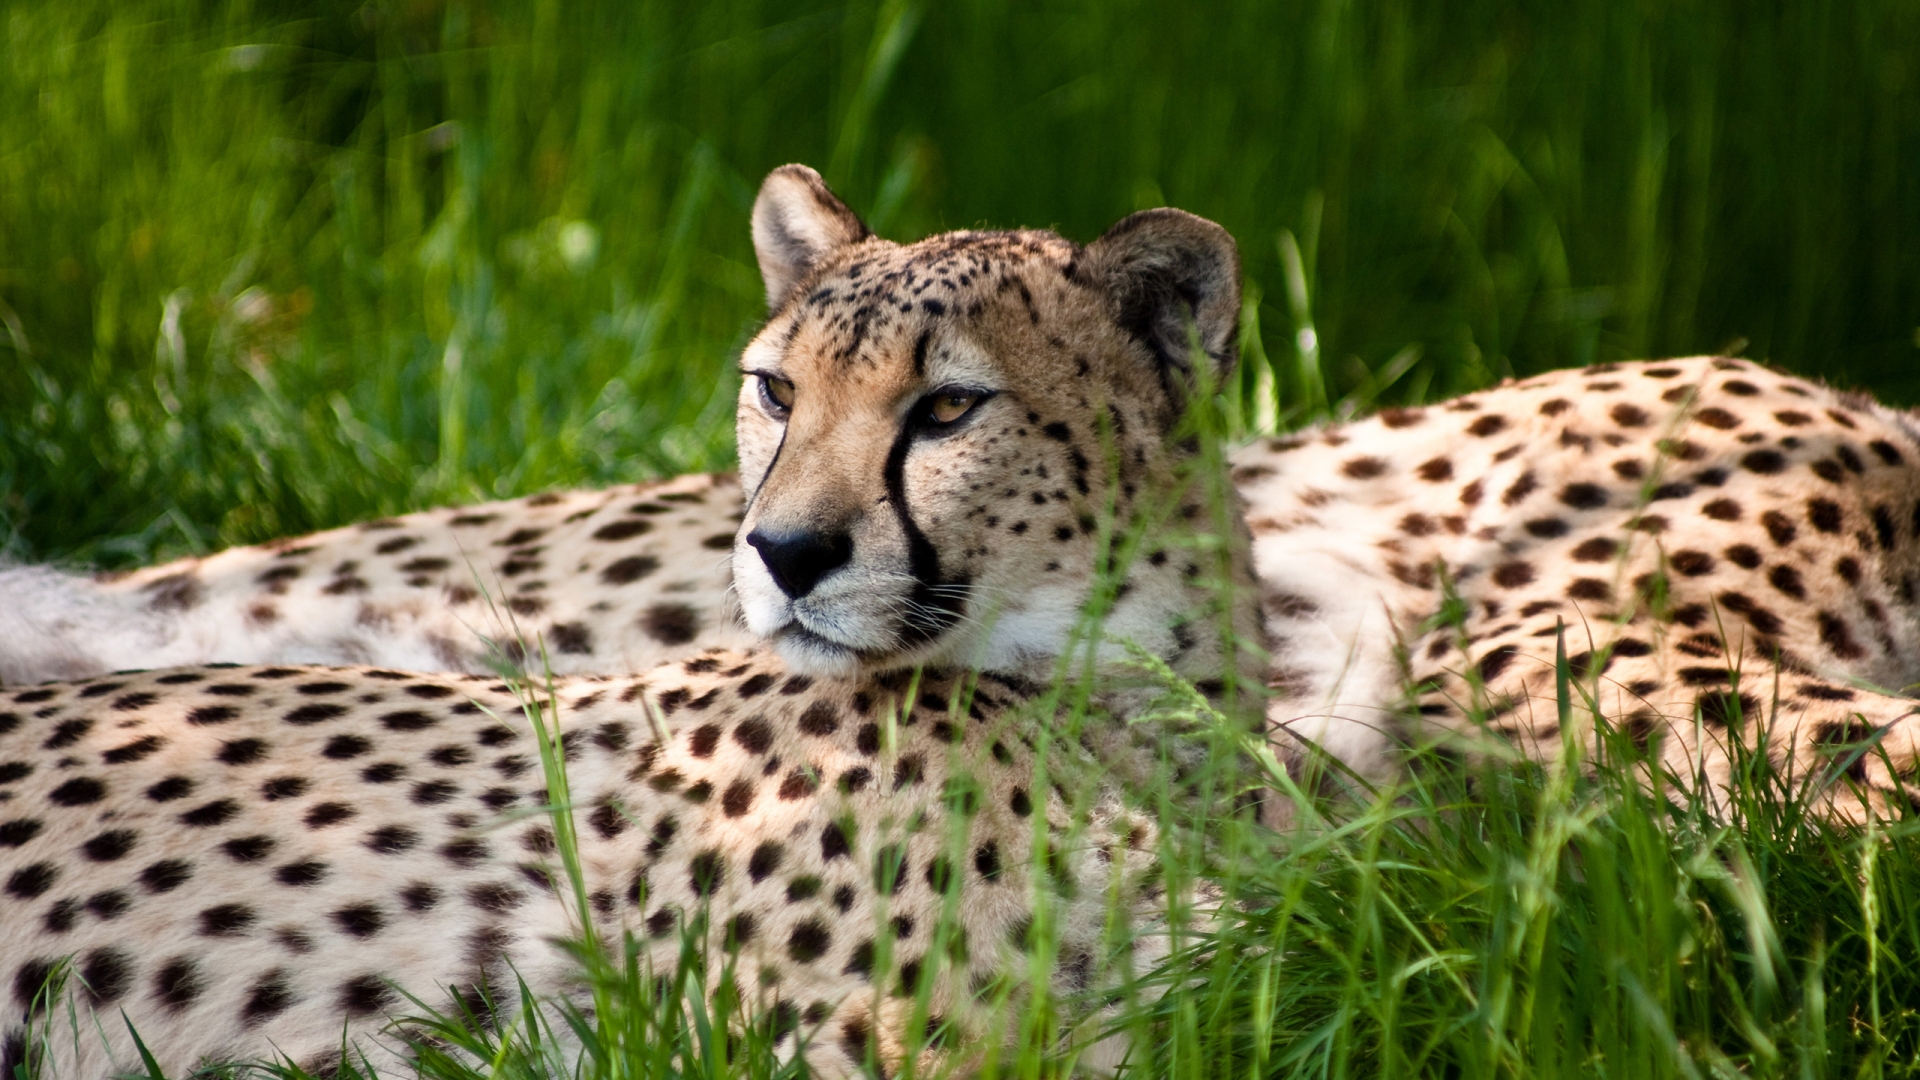 Cheetah Beauty for 1920 x 1080 HDTV 1080p resolution